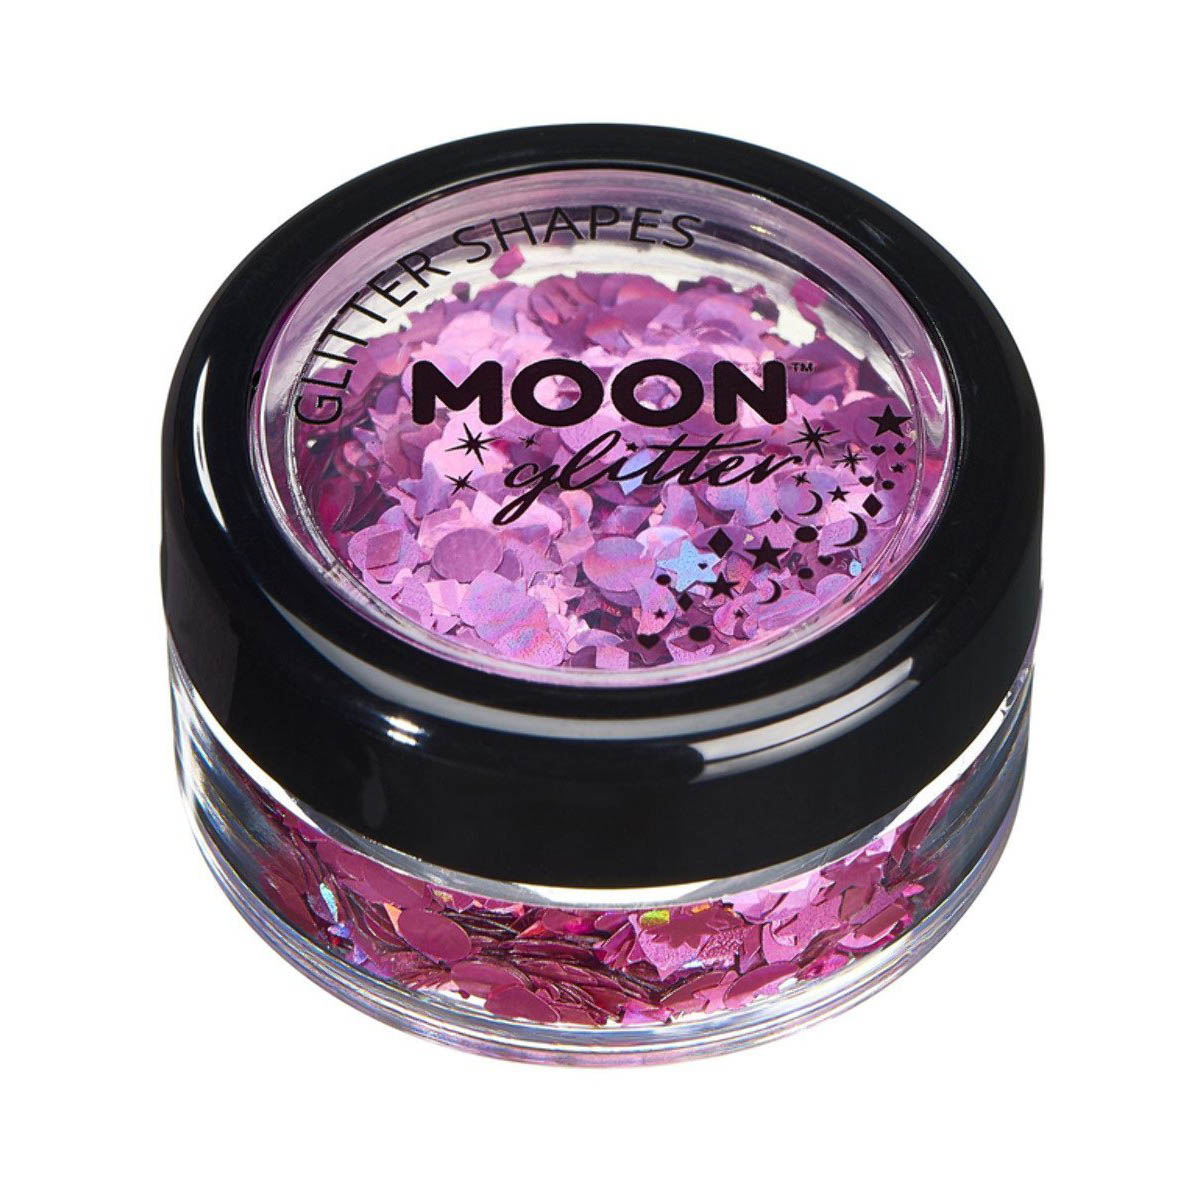 Moon glitter i burk, holografiska former 3g Rosa